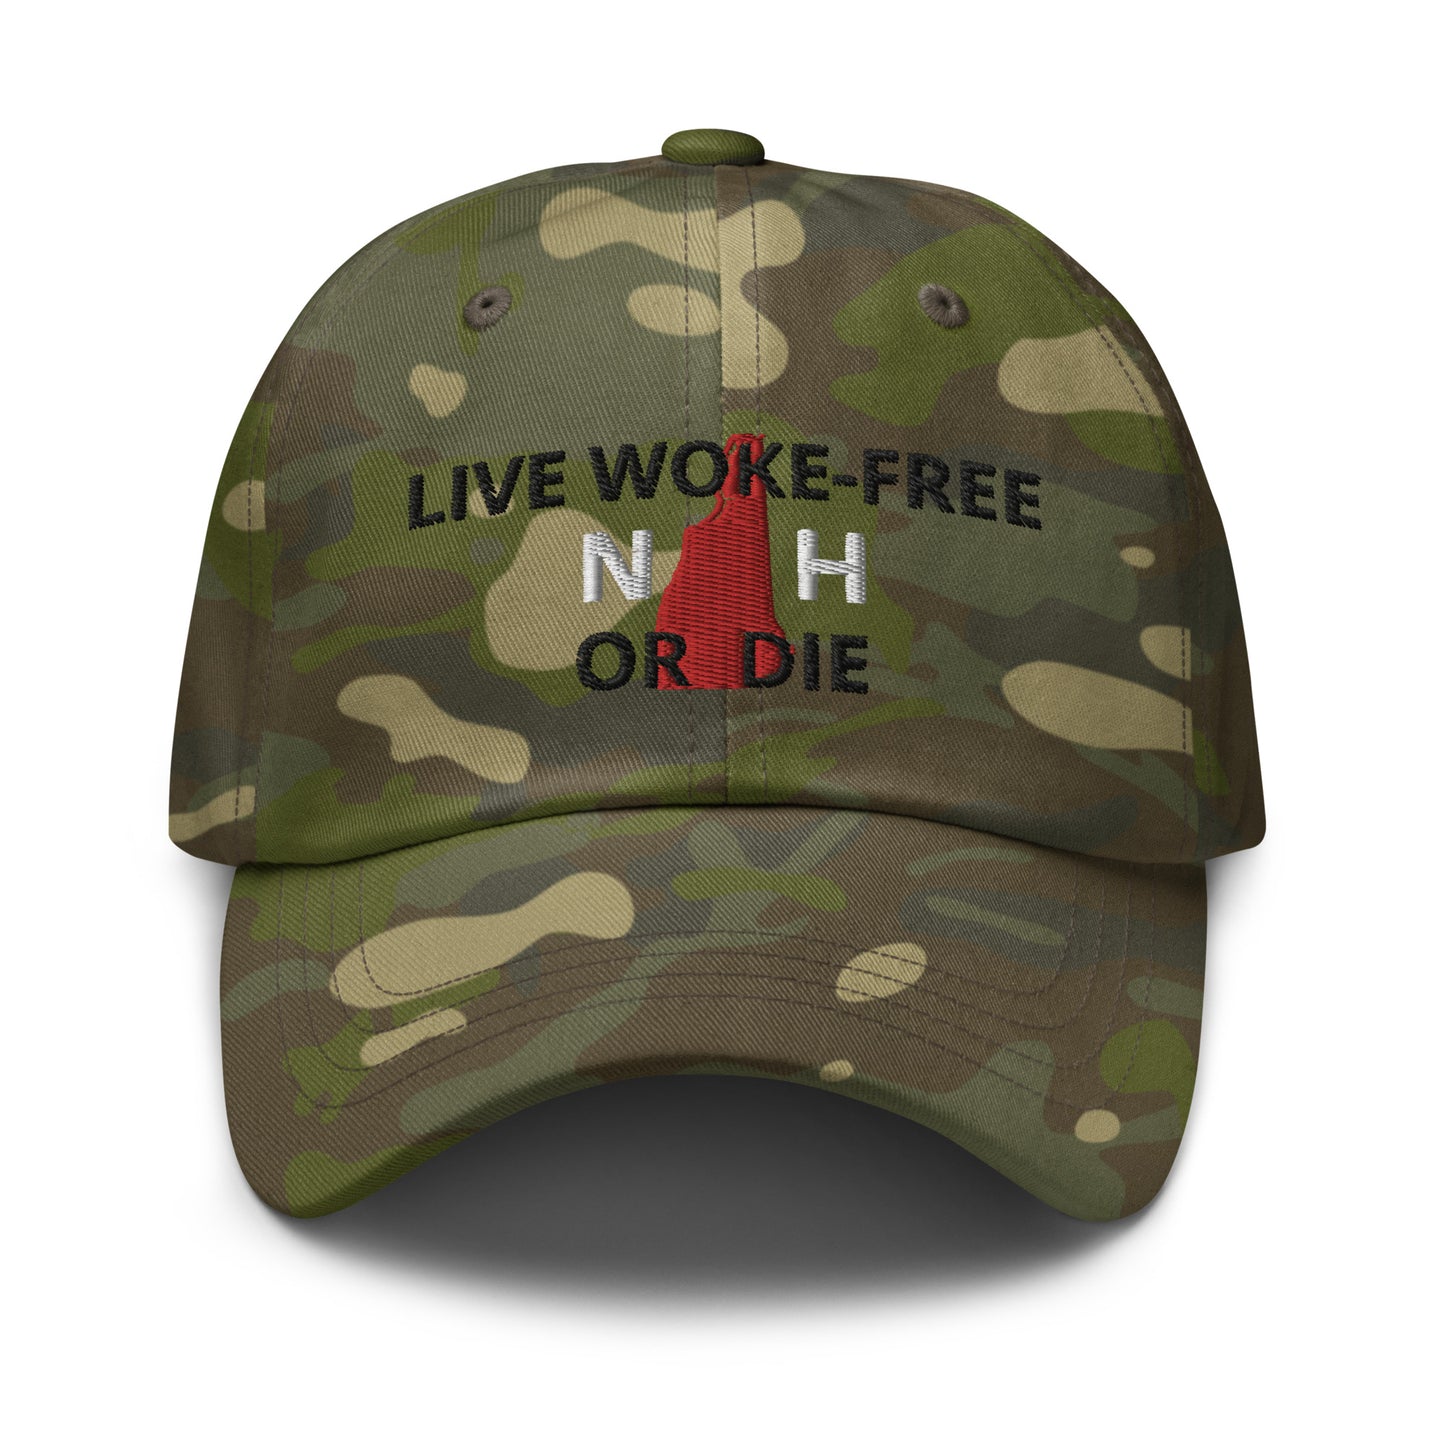 LIVE WOKE-FREE or DIE- New Hampshire